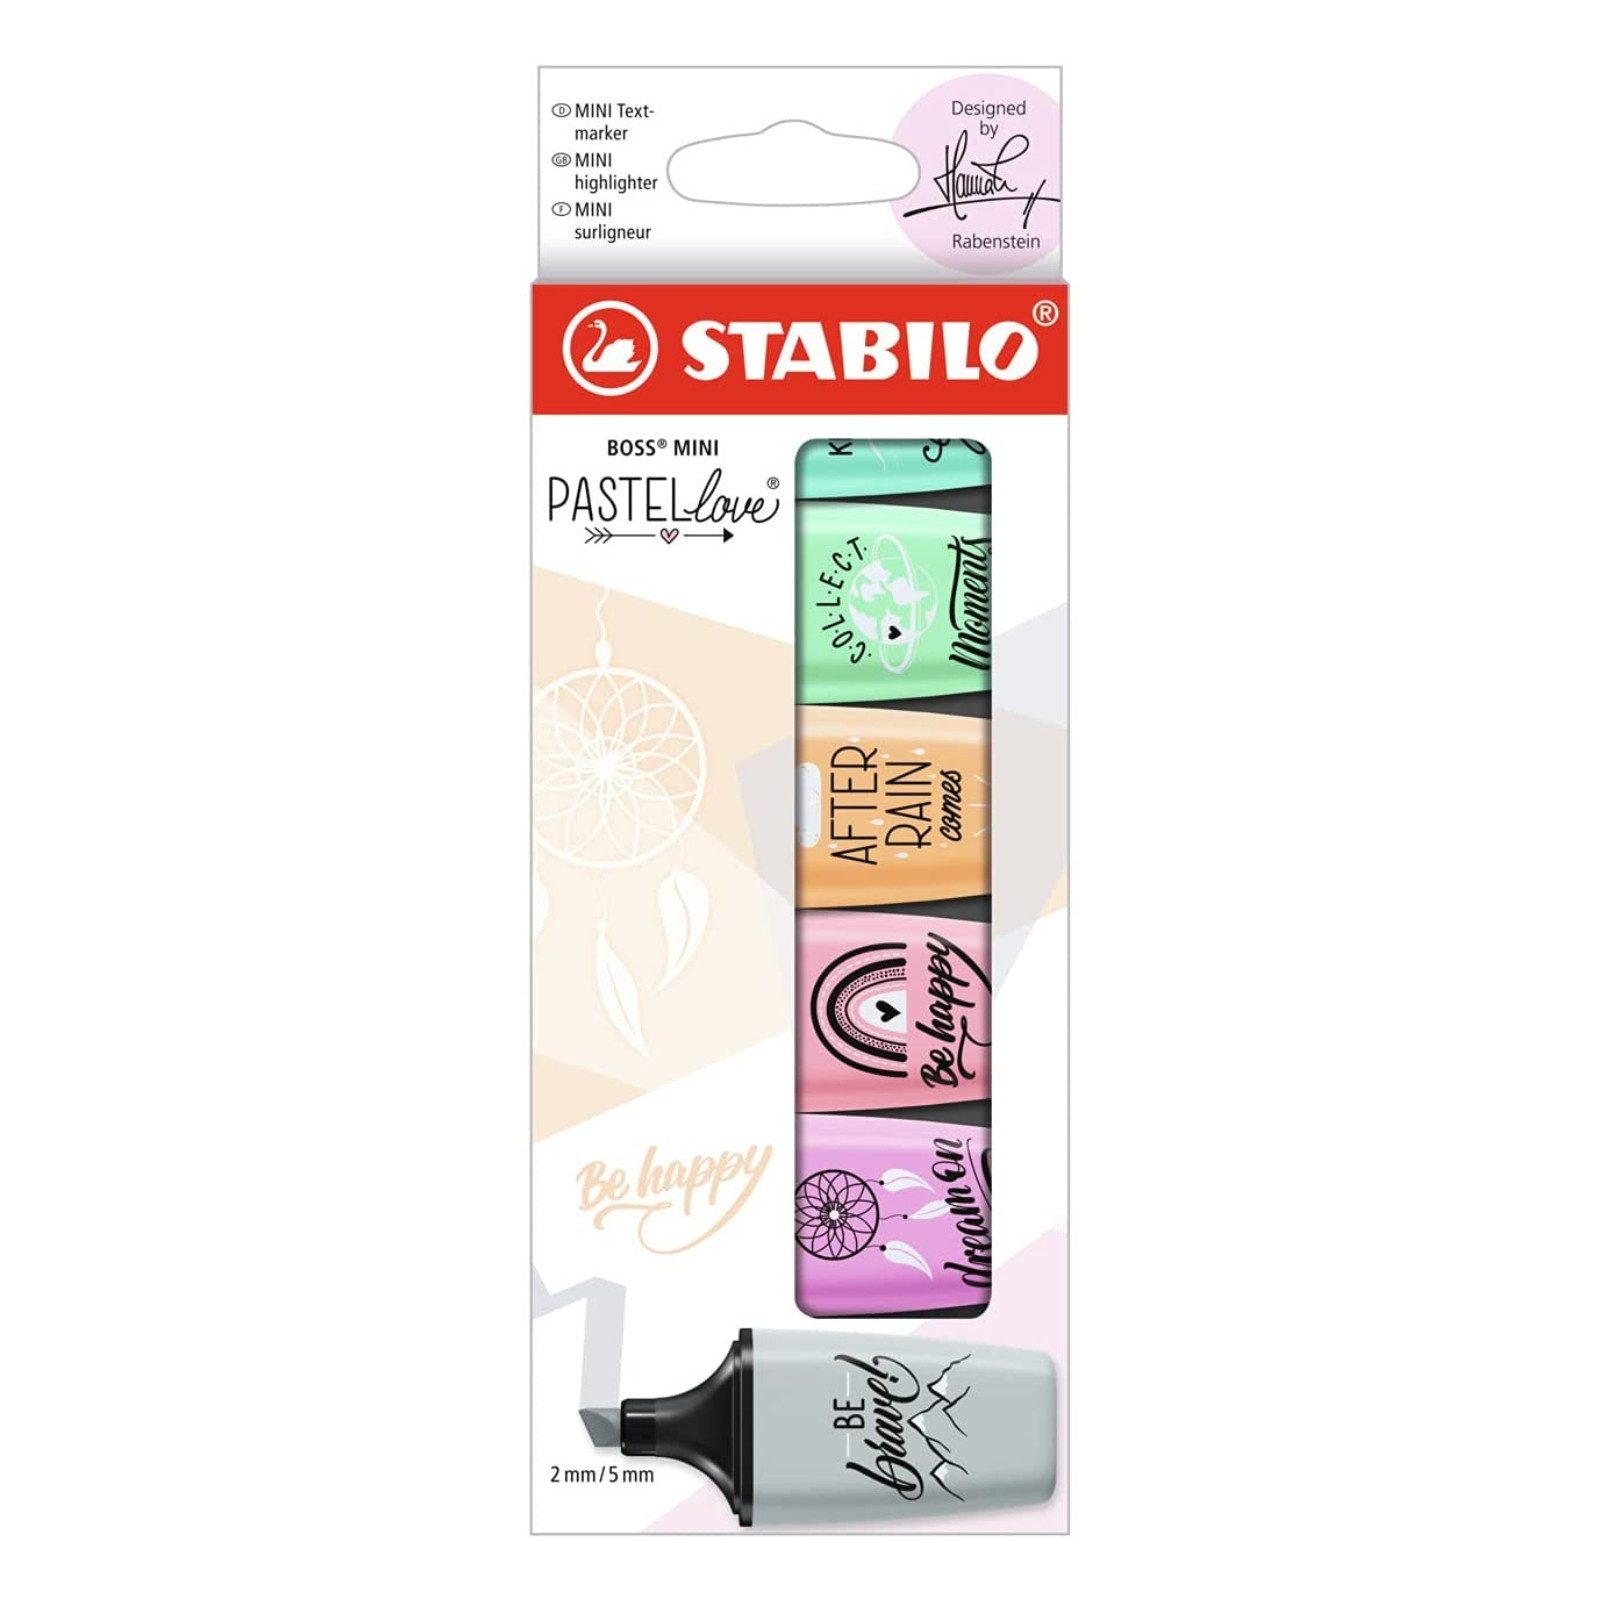 STABILO Marker STABILO BOSS MINI Textmarker - 2+5 mm - Pastellove 2.0 - 6er Etui